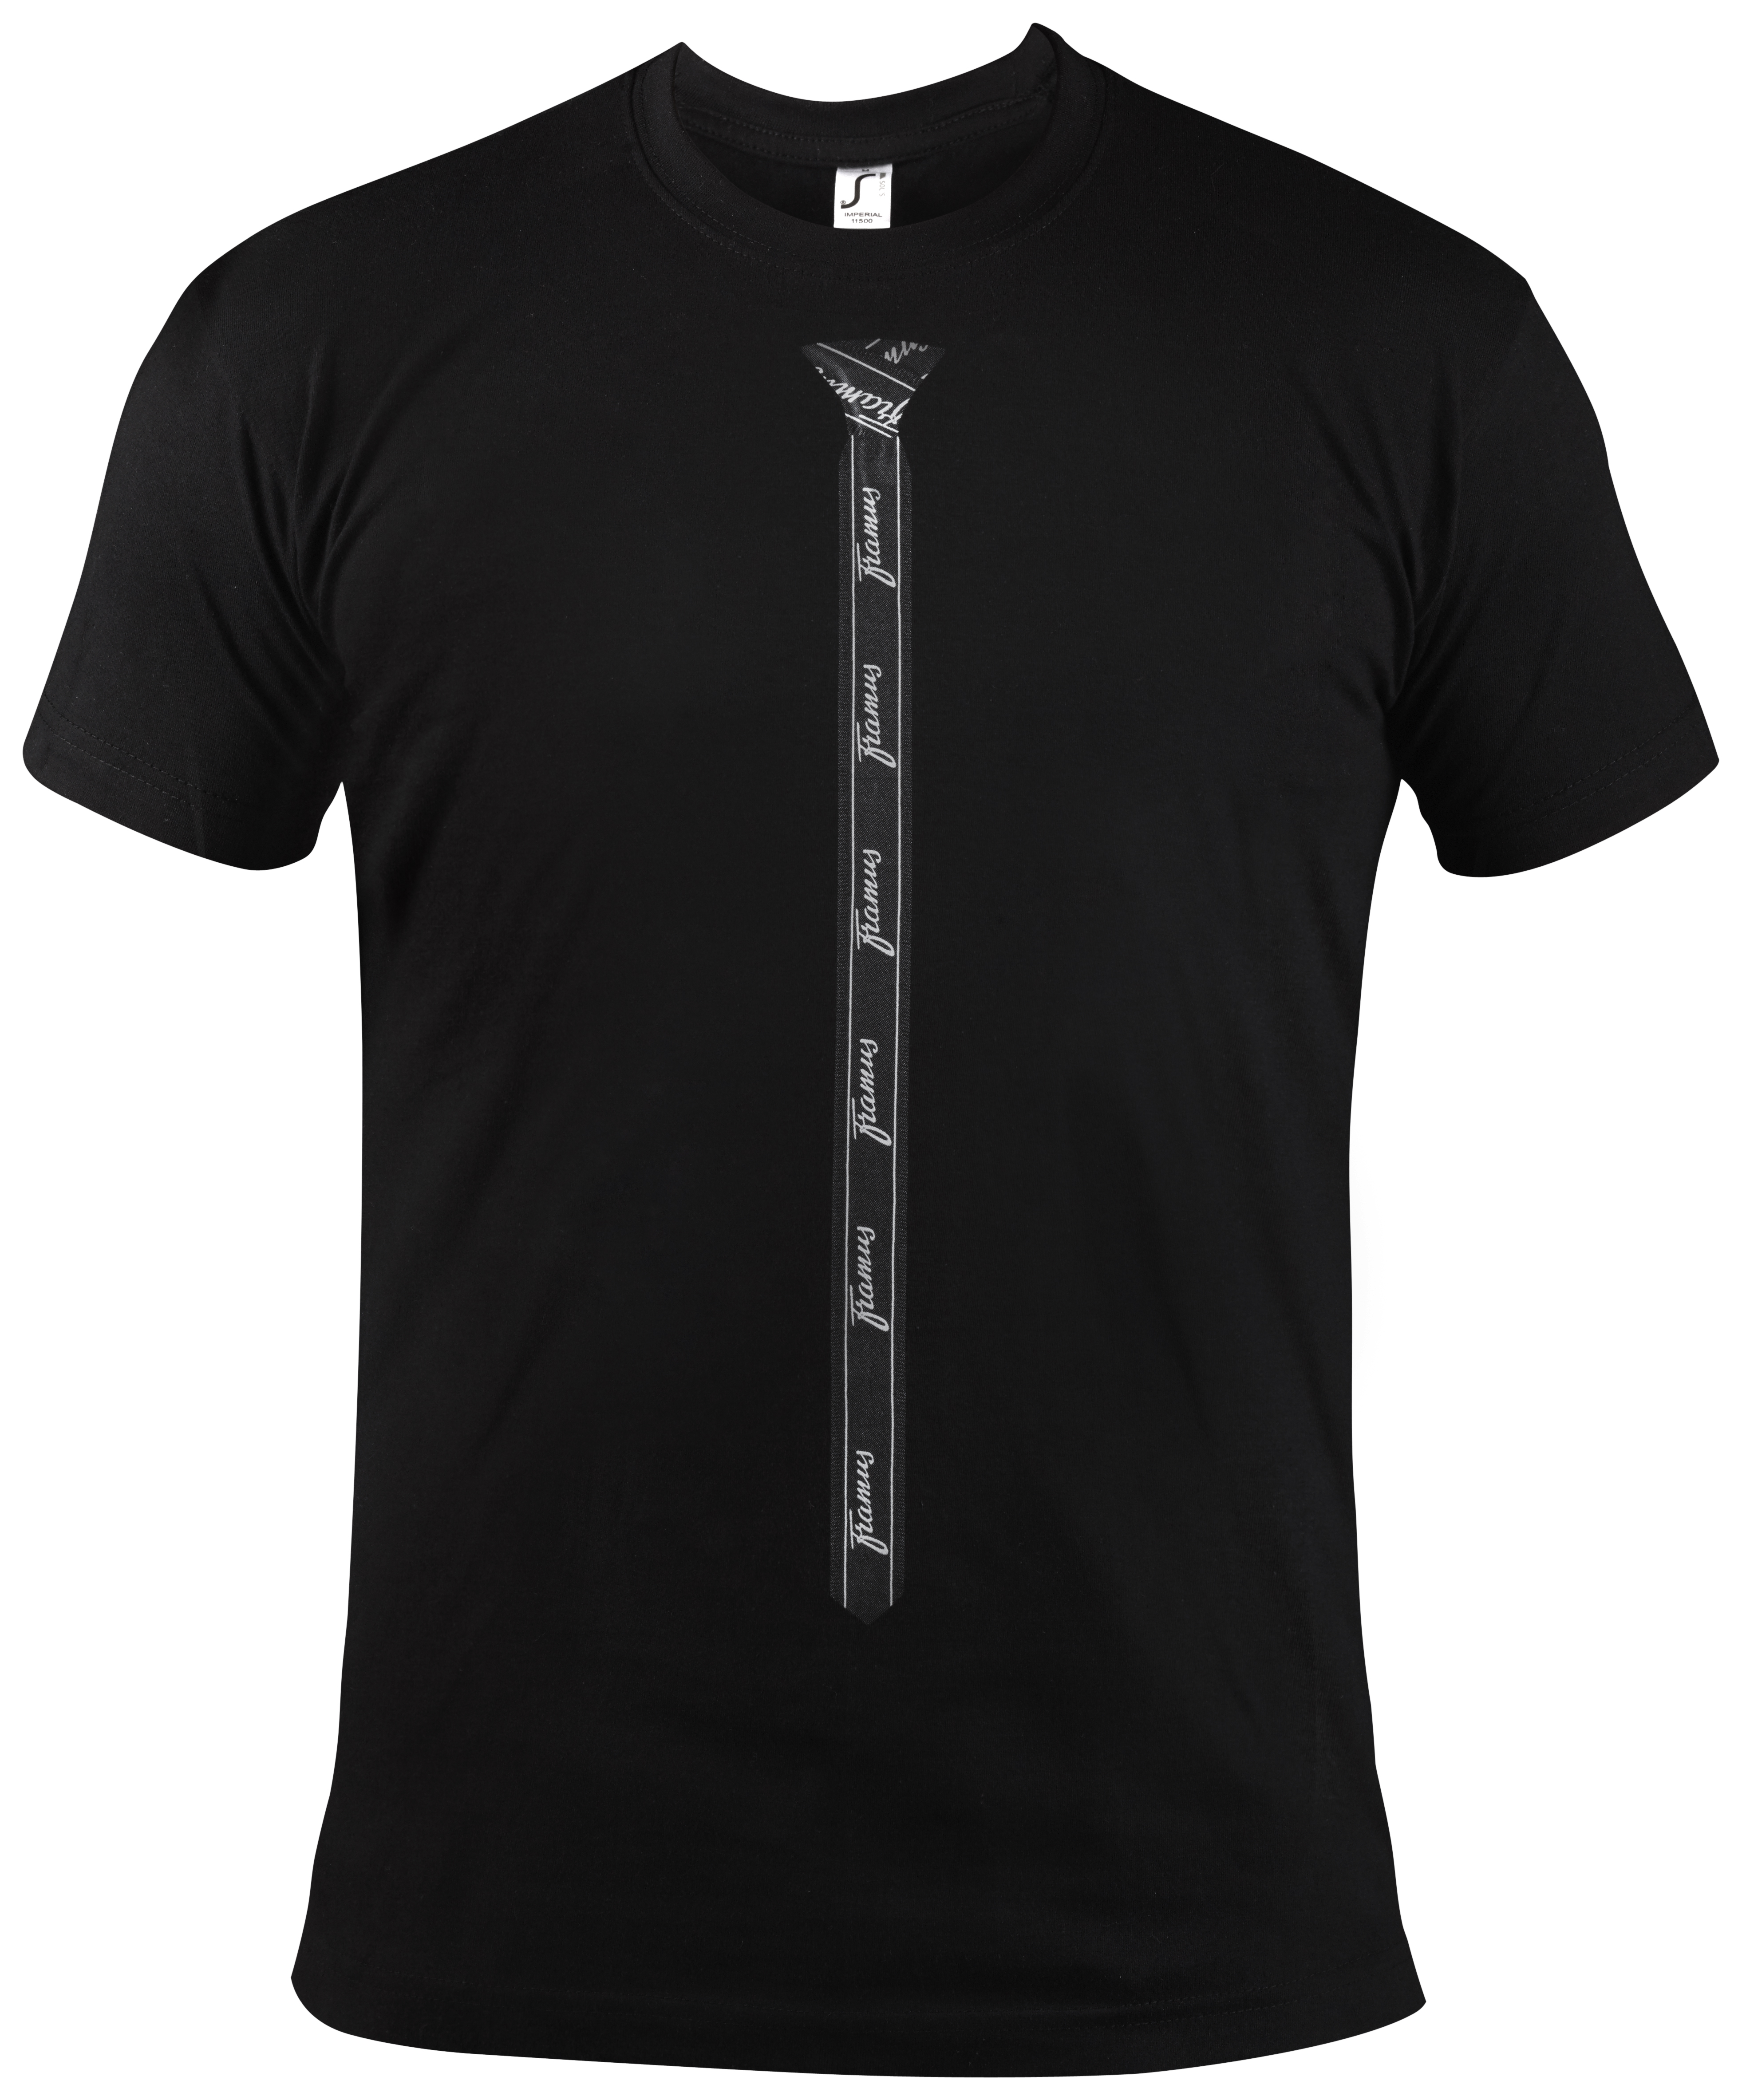 Framus Promo - Tie - T-Shirt - Male / Size S